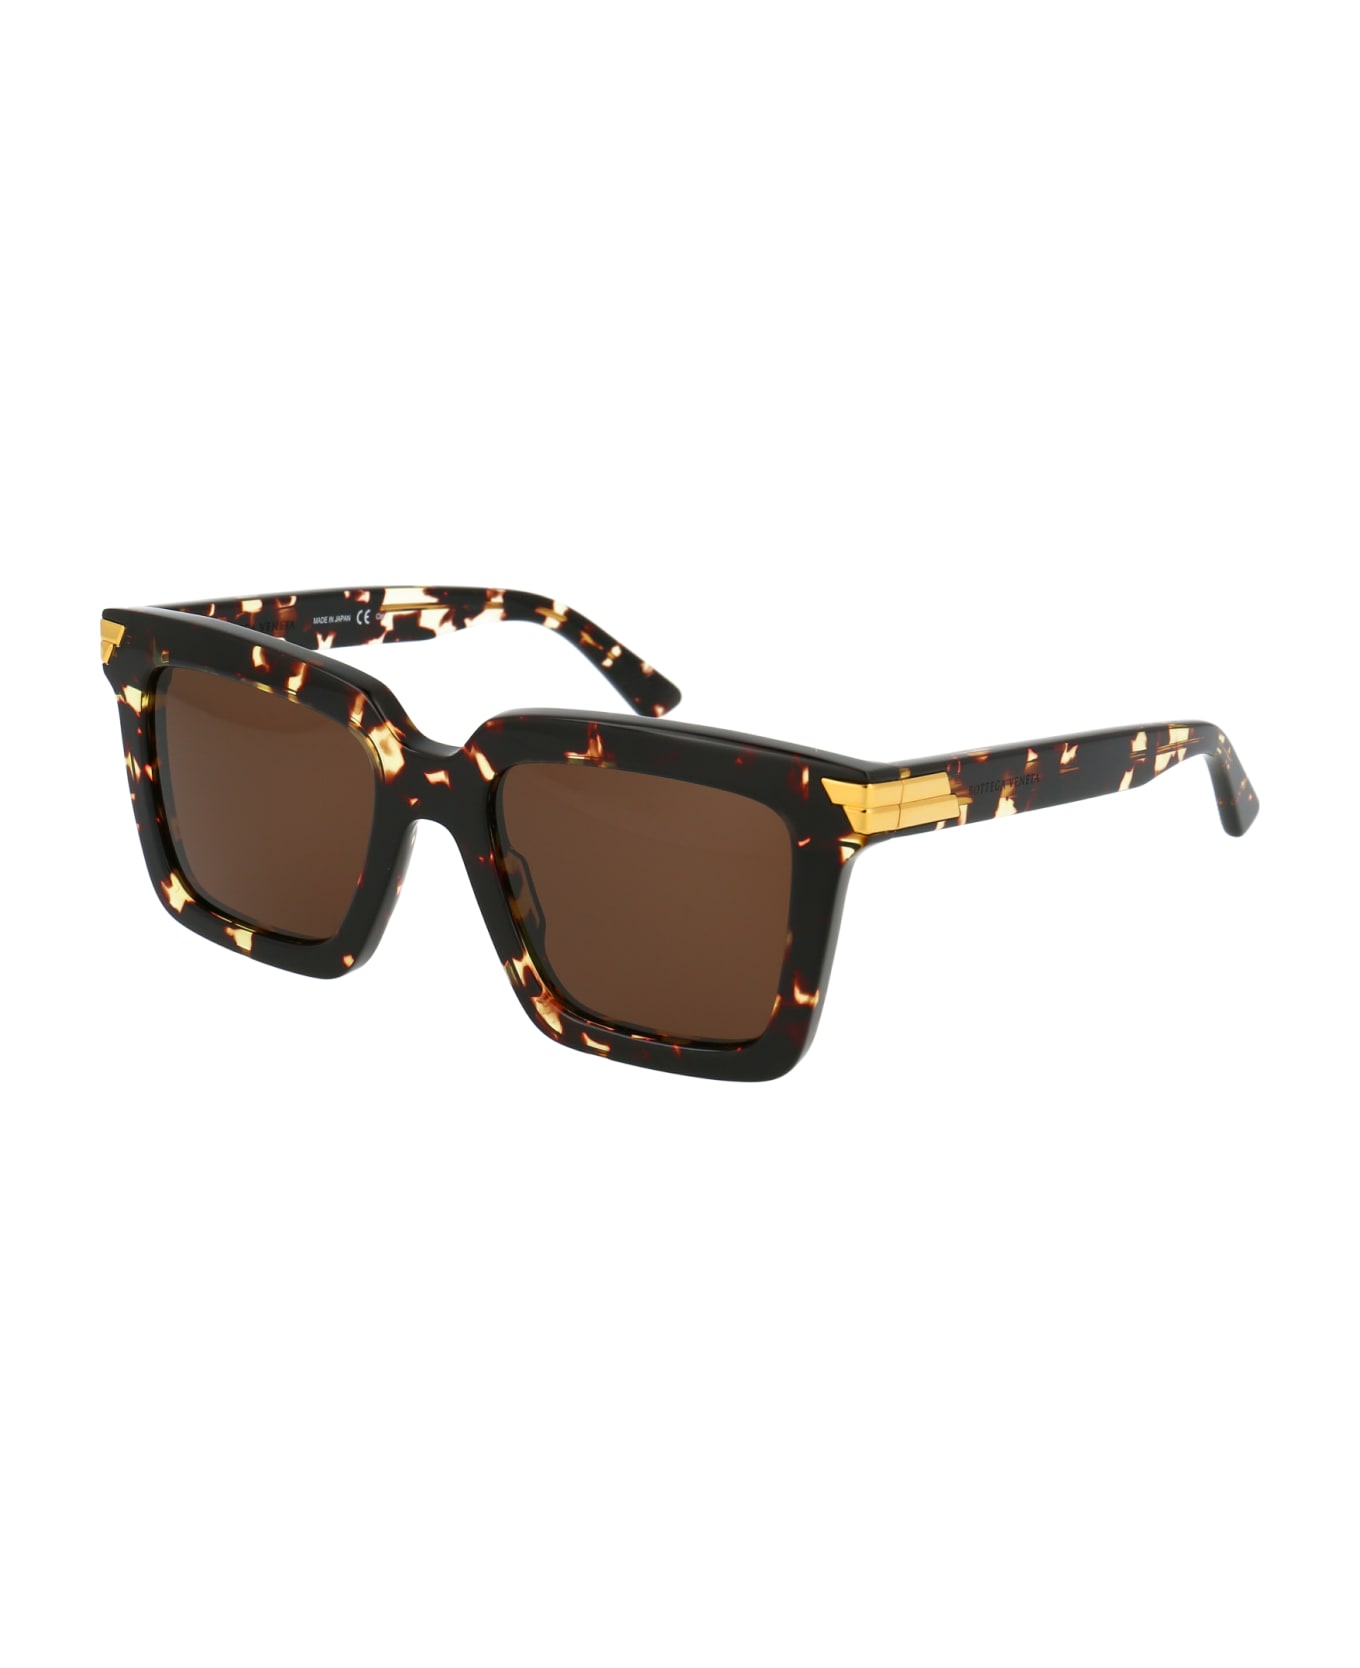 Bottega Veneta Eyewear Bv1005s Sunglasses - 002 HAVANA HAVANA BROWN